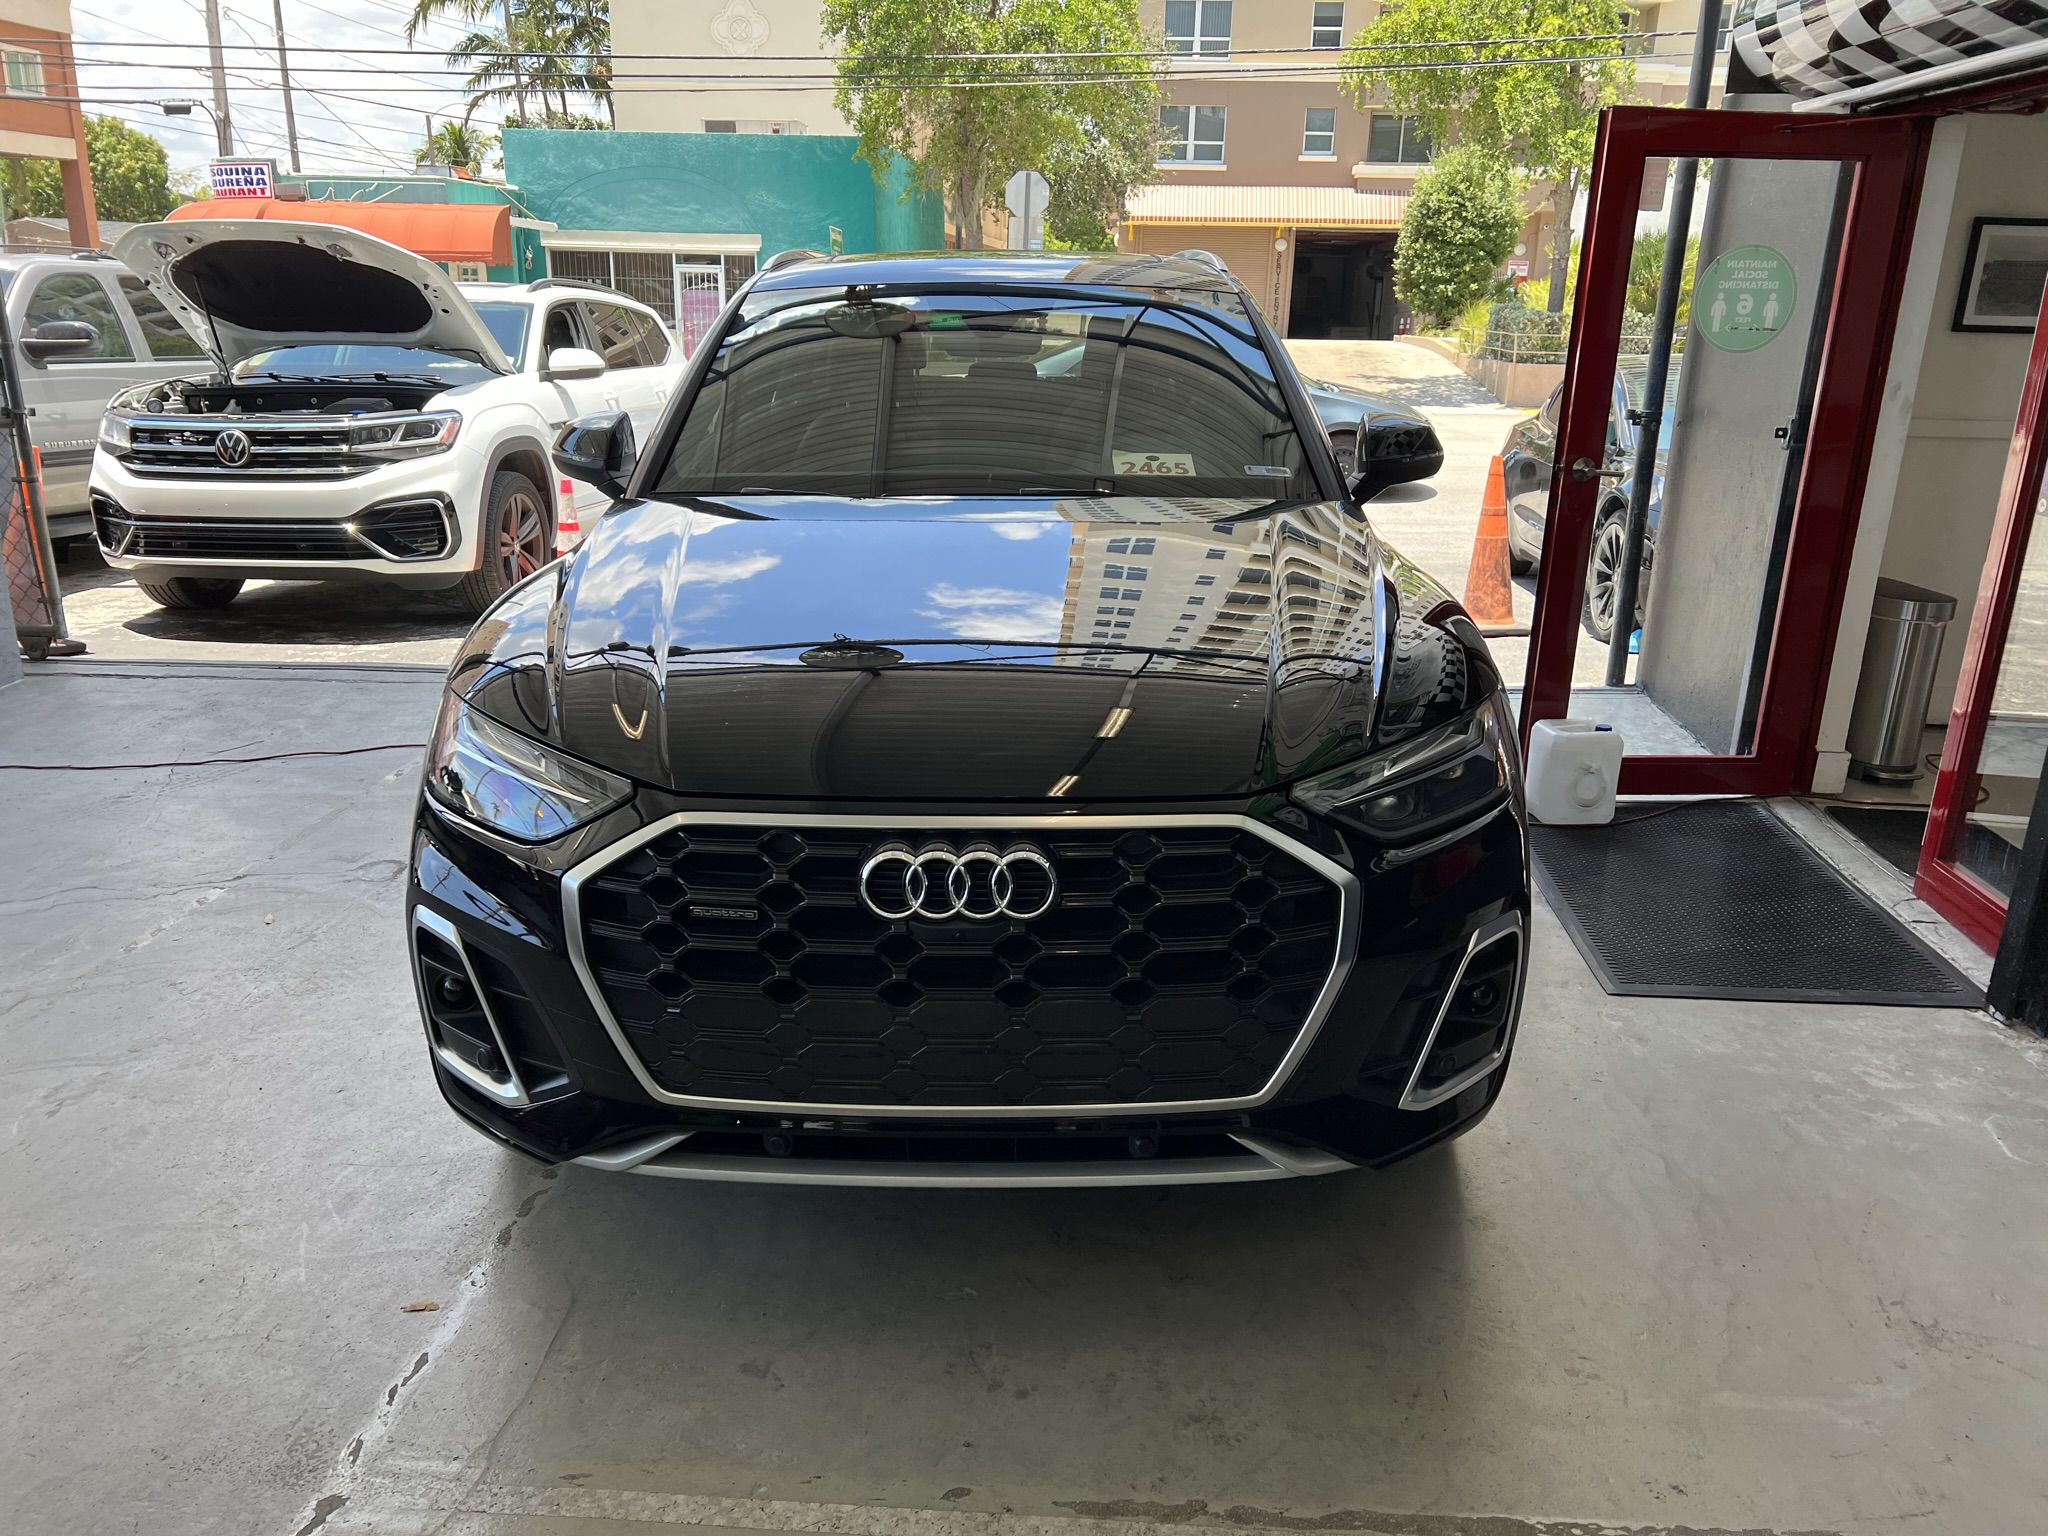 Audi vehicle entering repair shop for service in Miami, Fl